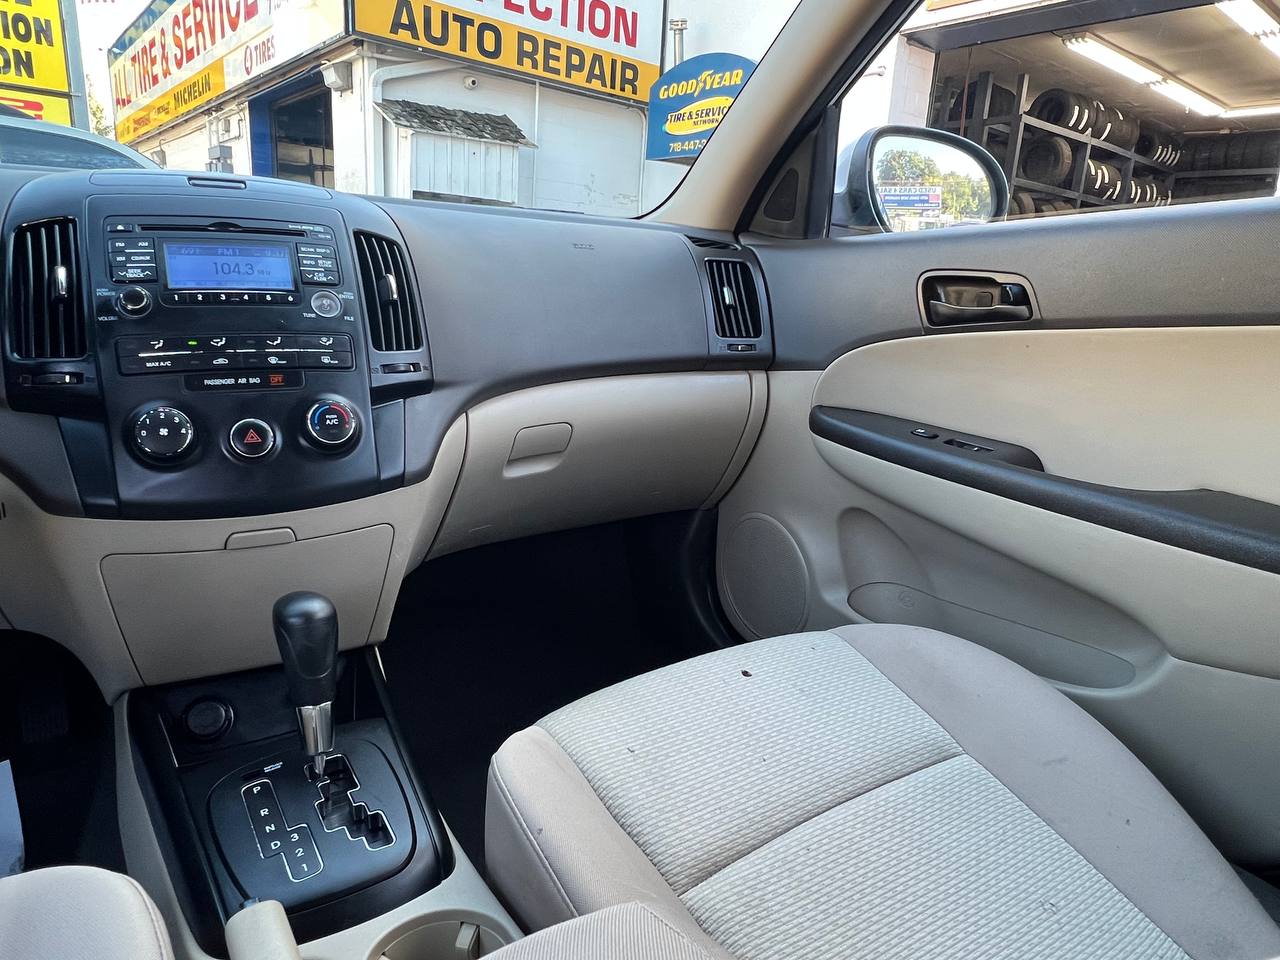 Used - Hyundai Elantra Touring Wagon for sale in Staten Island NY